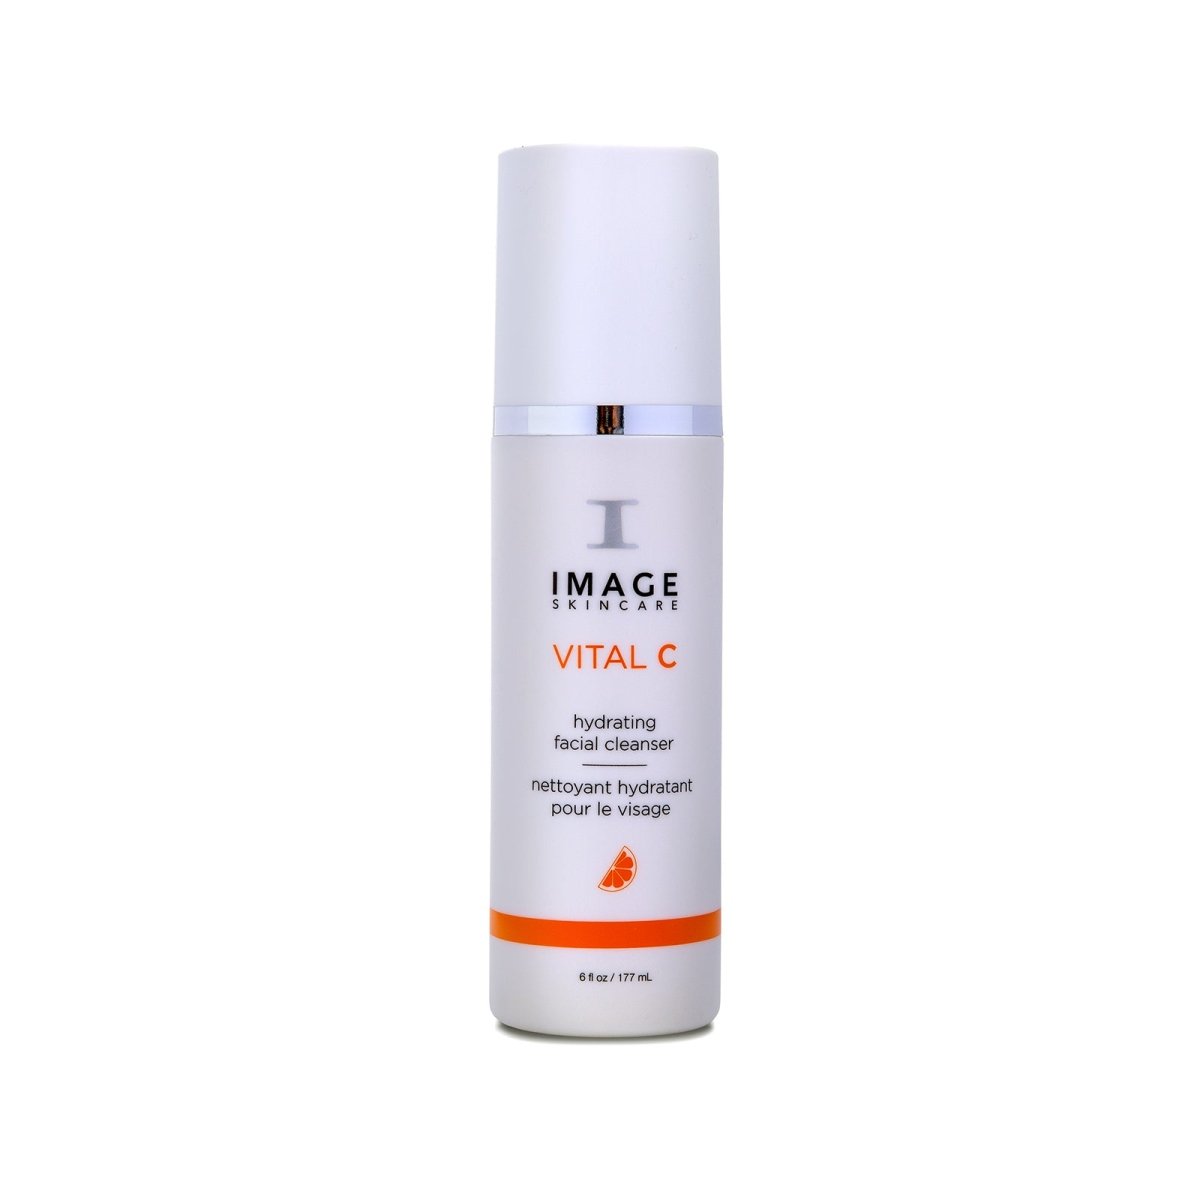 IMAGE Skincare Vital C Hydrating Facial Cleanser - SkincareEssentials